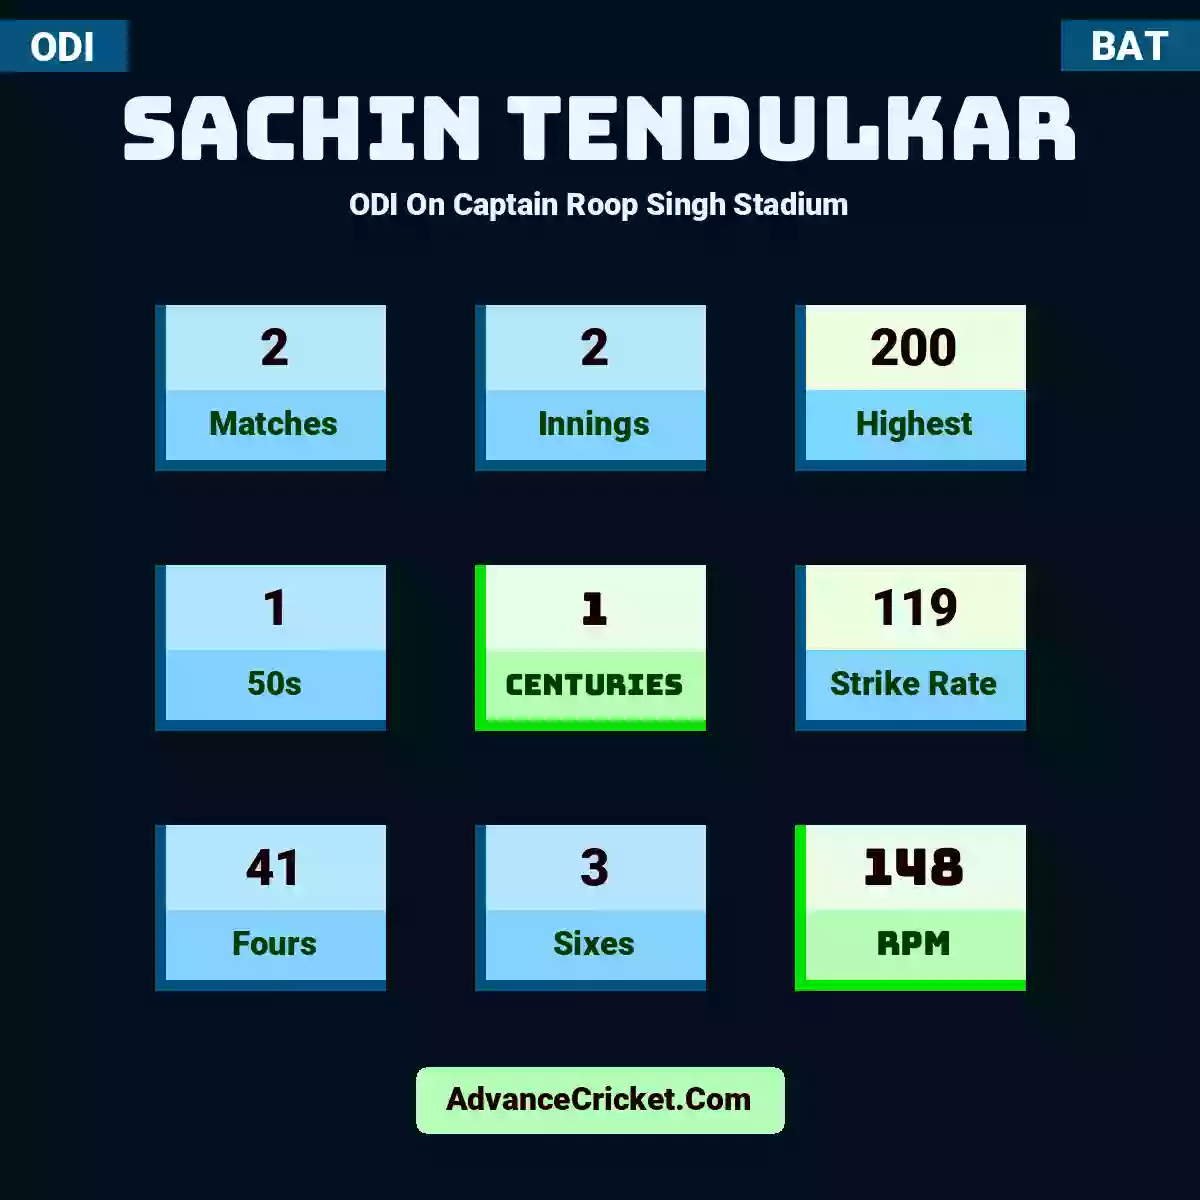 Sachin Tendulkar ODI  On Captain Roop Singh Stadium, Sachin Tendulkar played 2 matches, scored 200 runs as highest, 1 half-centuries, and 1 centuries, with a strike rate of 119. S.Tendulkar hit 41 fours and 3 sixes, with an RPM of 148.